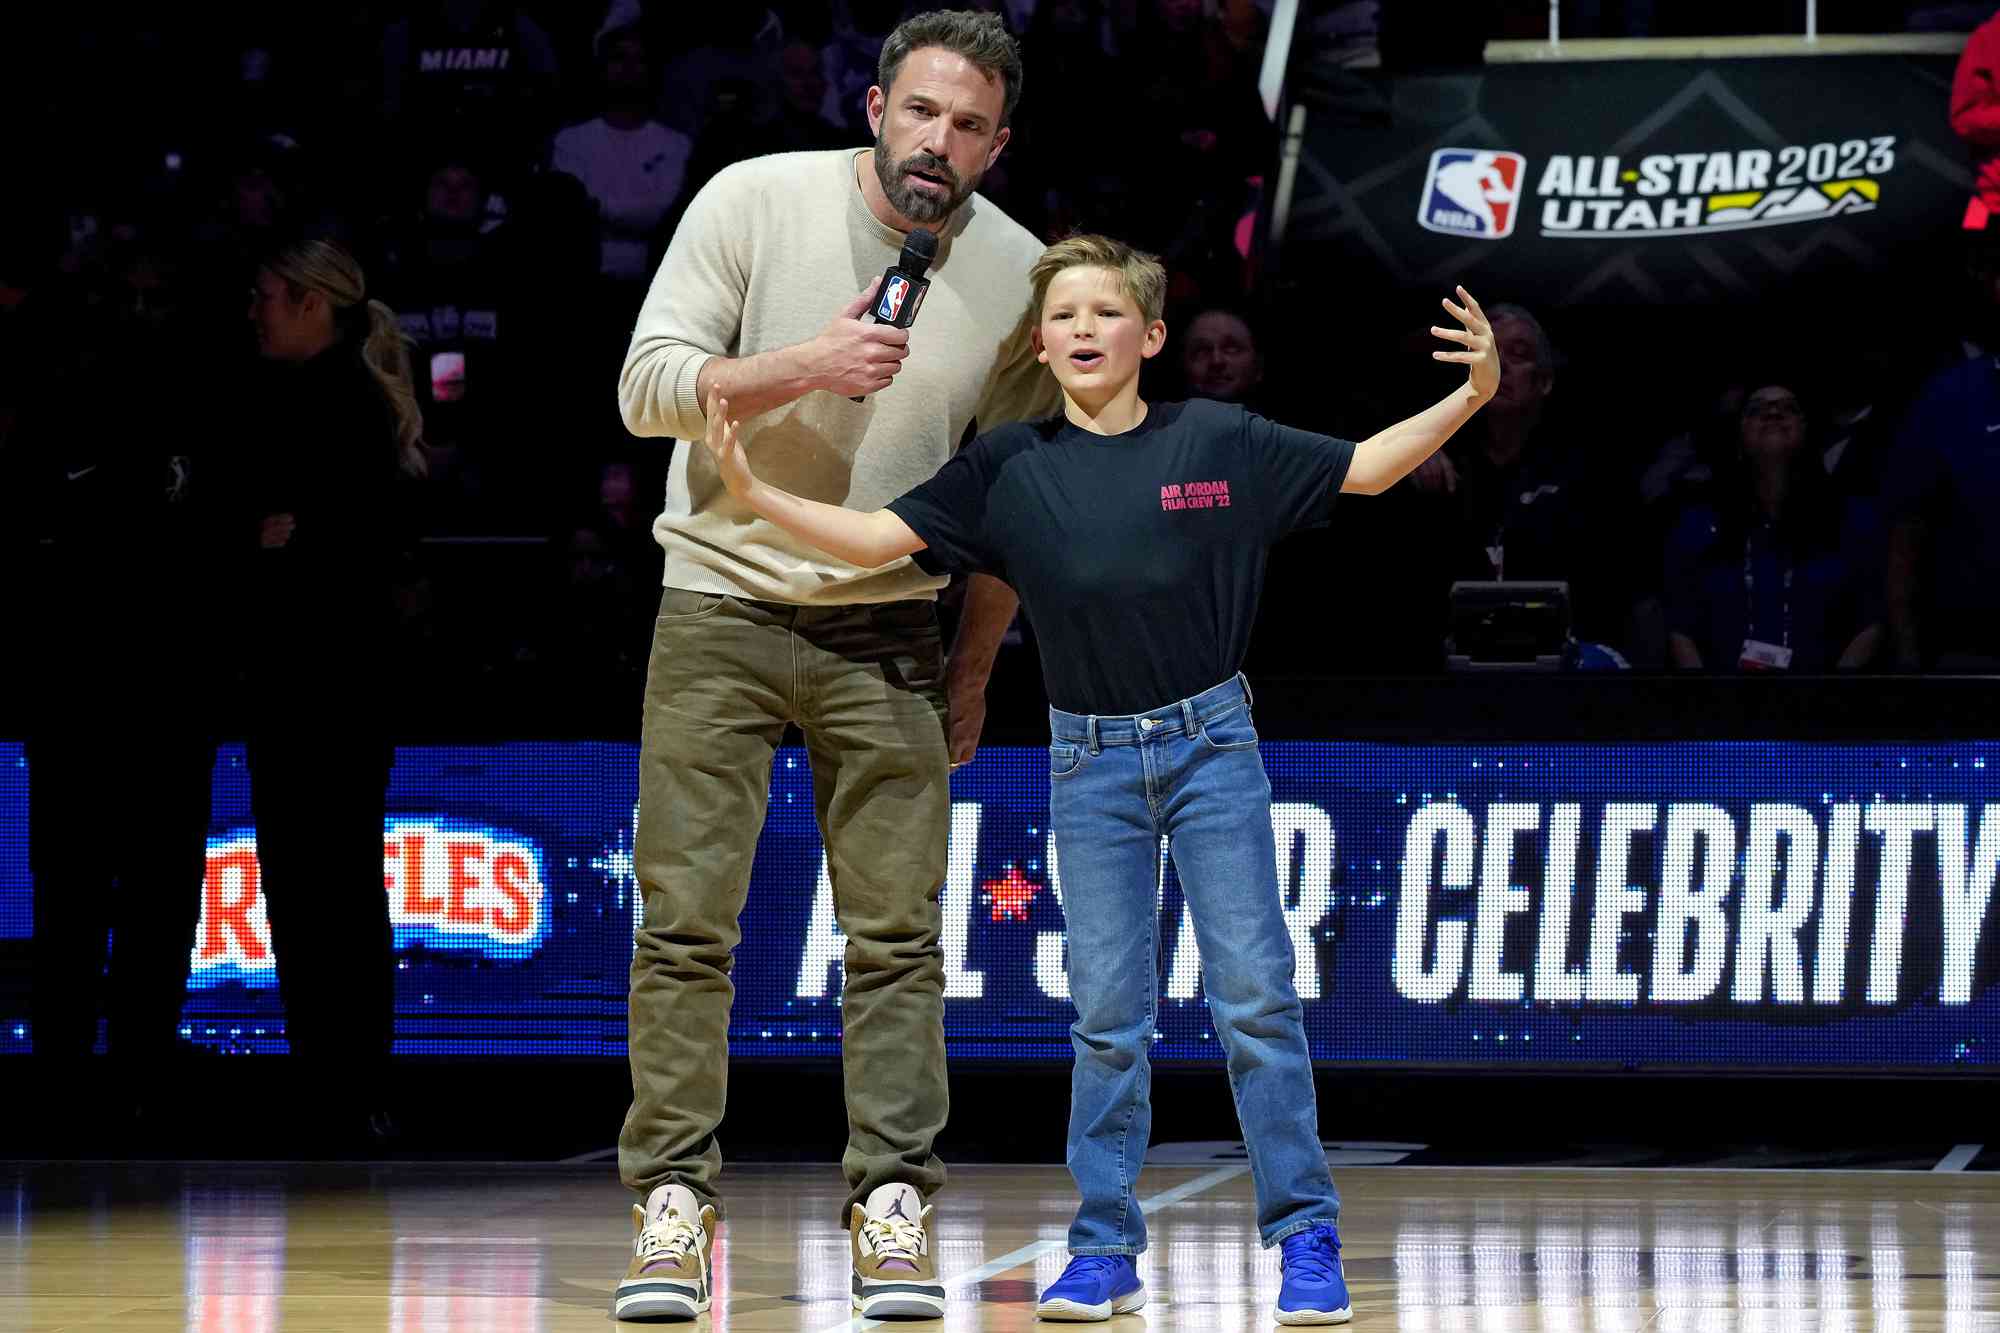 Ben Affleck and Samuel Garner Affleck speak at the Ruffles Celebrity Game during the 2023 NBA All-Star Weekend at Vivint Arena on February 17, 2023 in Salt Lake City, Utah.